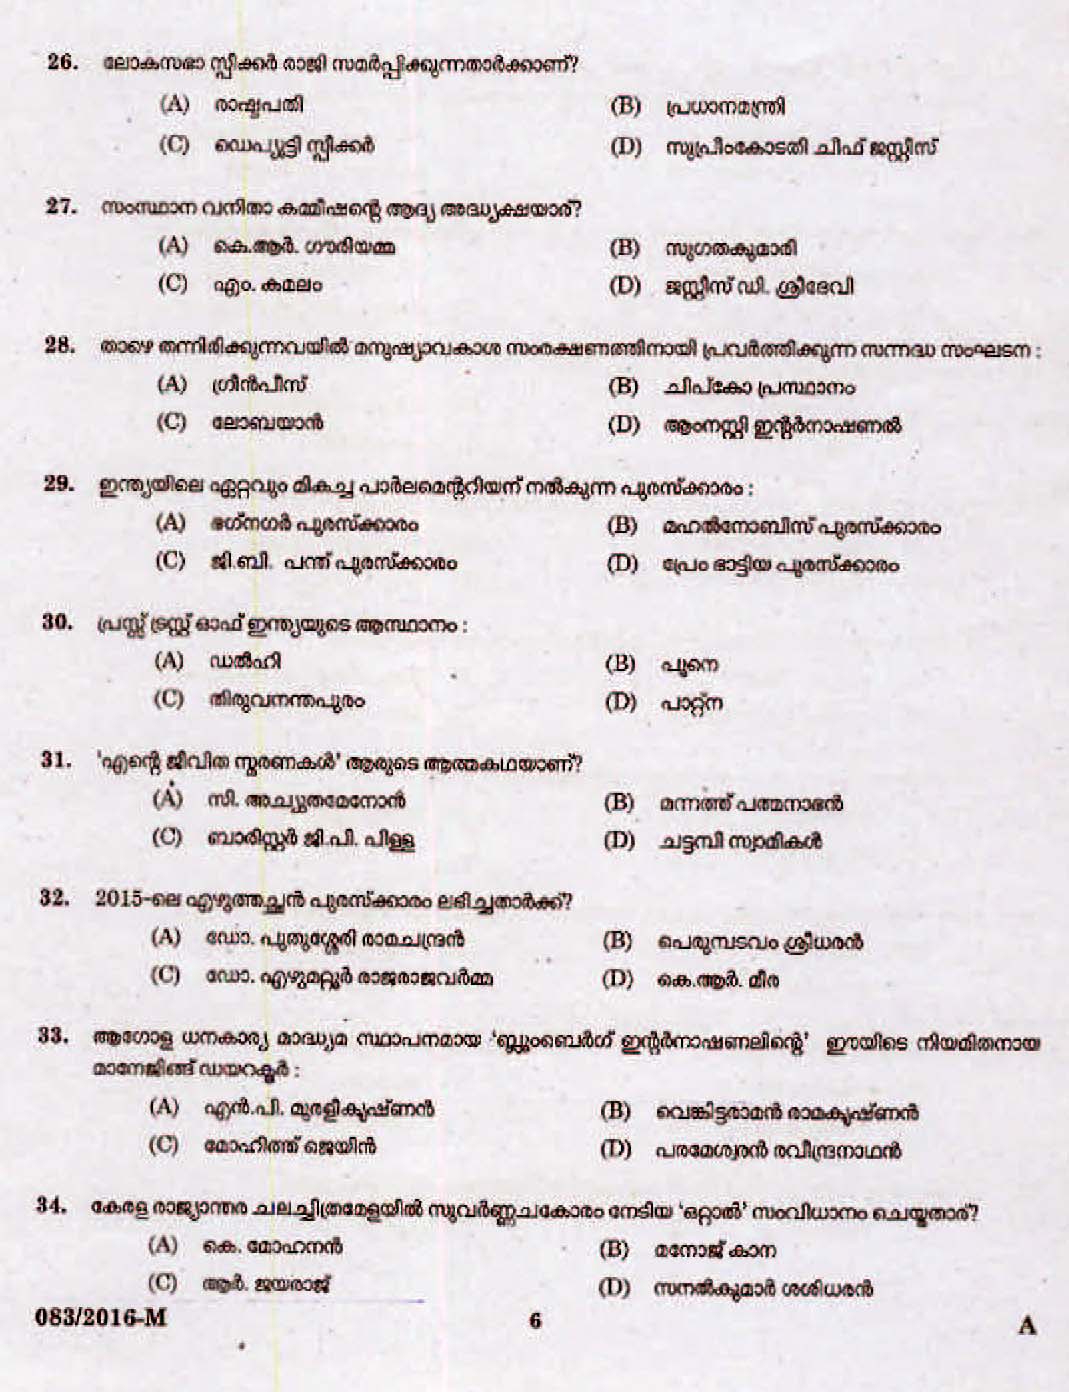 Kerala PSC Statistical Assistant Grade II OMR Exam 2016 Question Paper Code 0832016 M 4